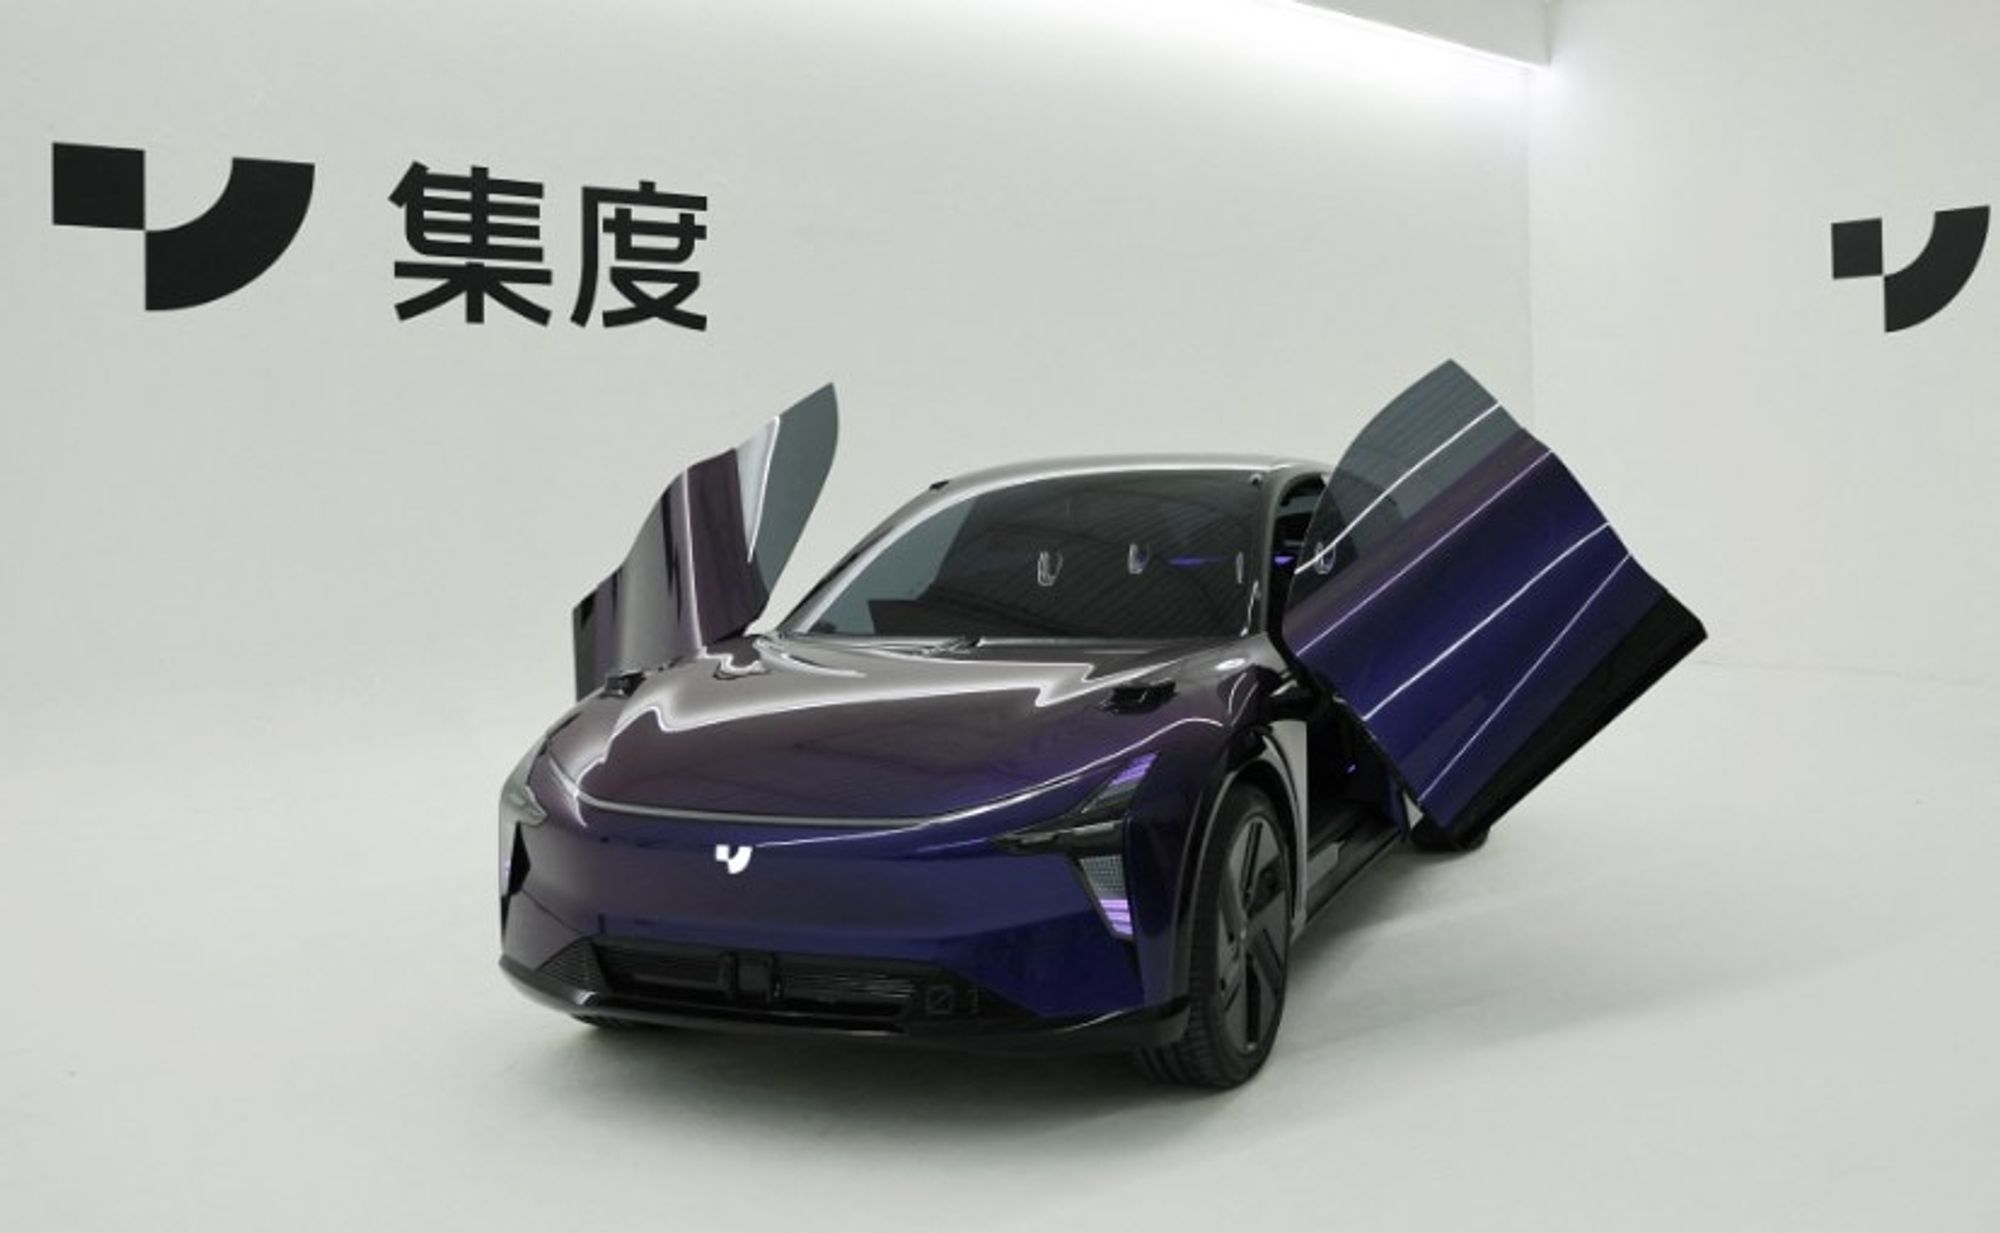 Baidu's Electric Vehicle Firm Jidu Unveils First 'Robot' Car